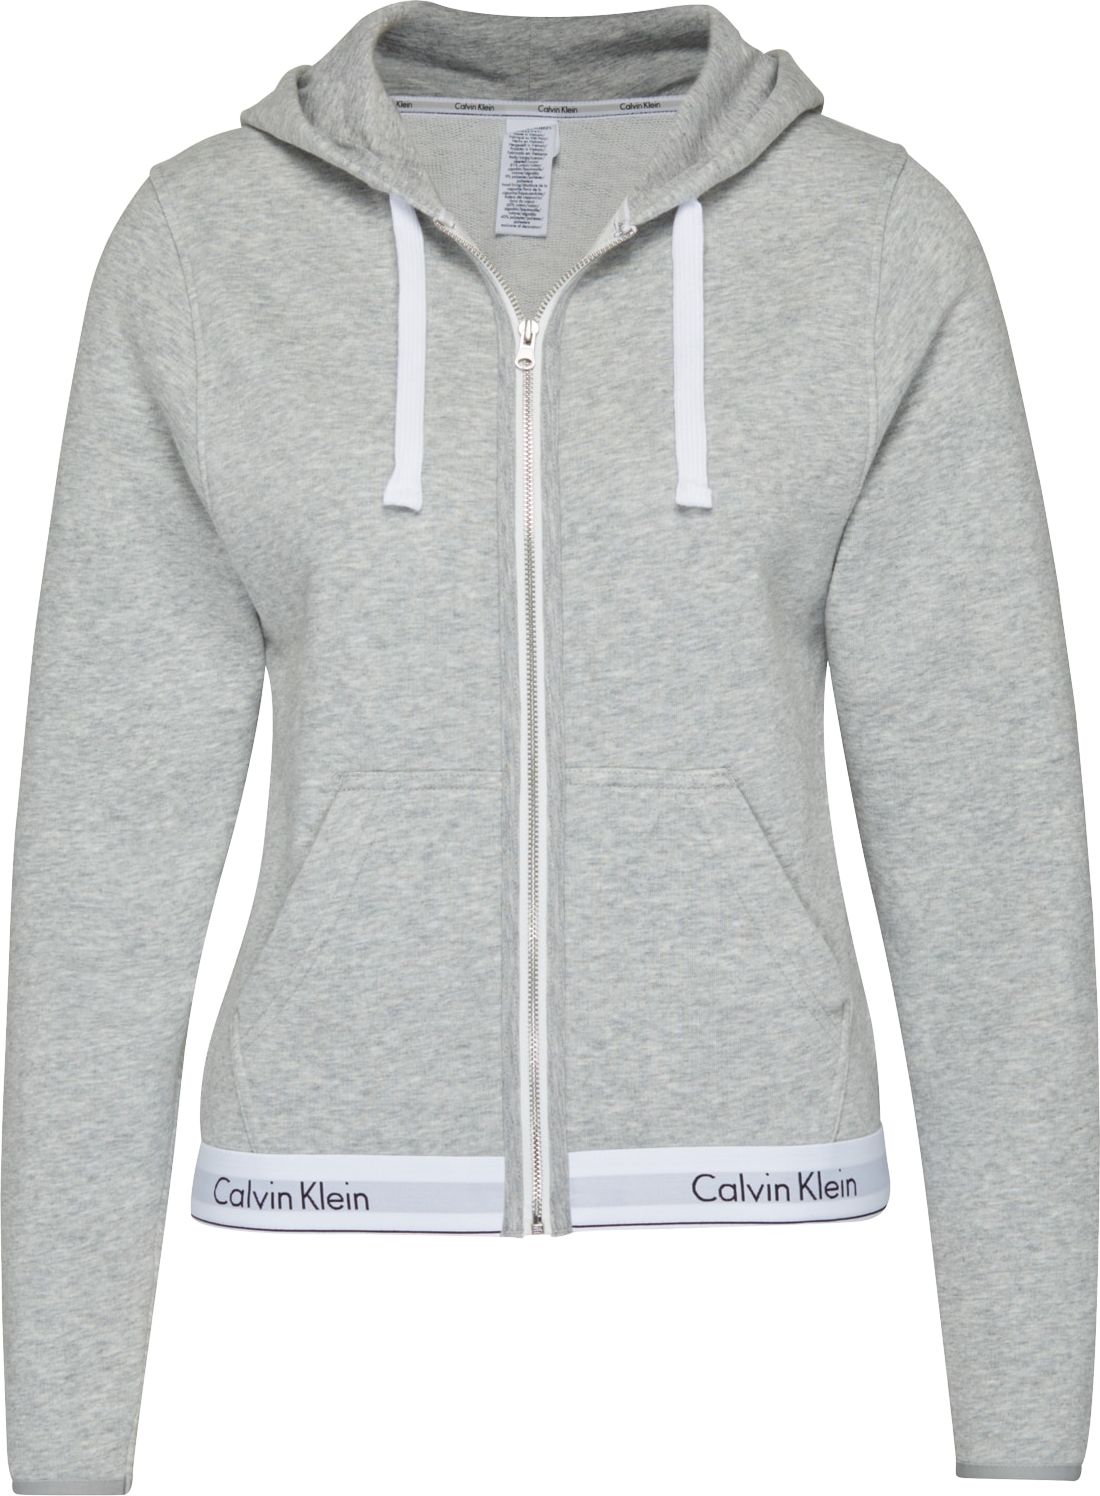 Calvin Klein Underwear Mikina s kapucí šedý melír / bílá / černá / šedá